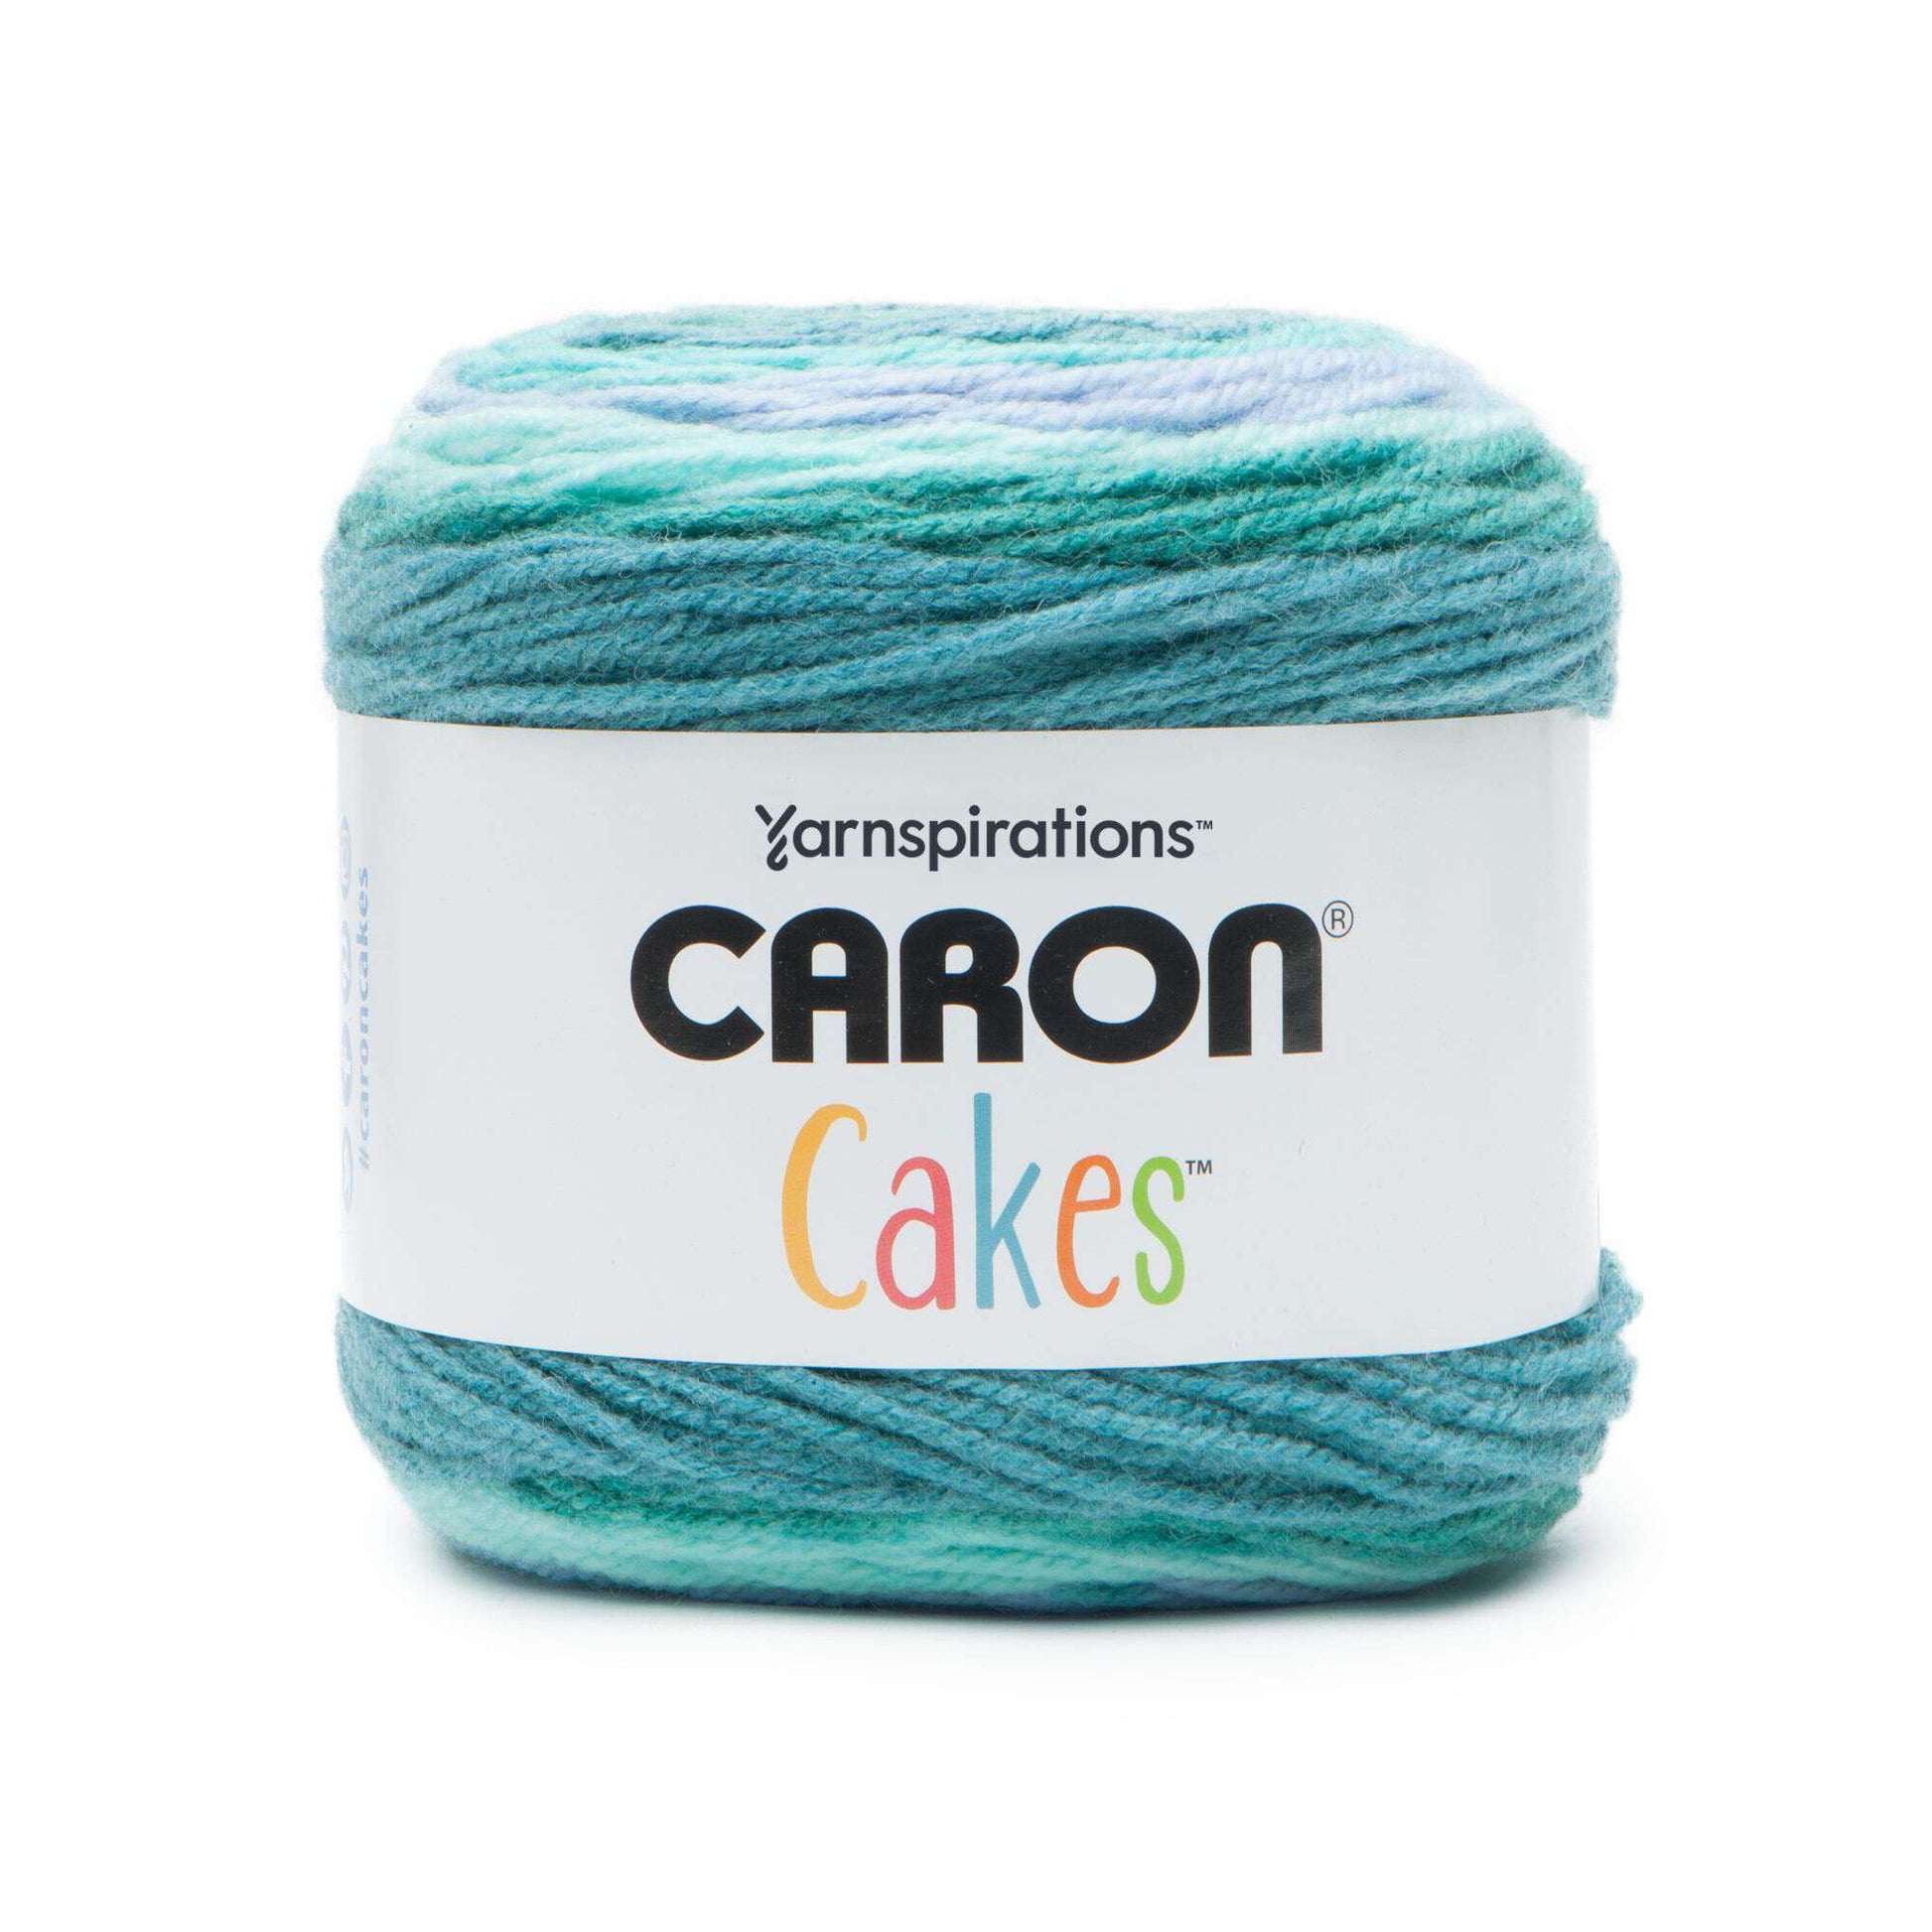 Caron Big Cakes Yarnspirations Toffee Brickle 603 Yards Medium 4 Red Gold  Blue